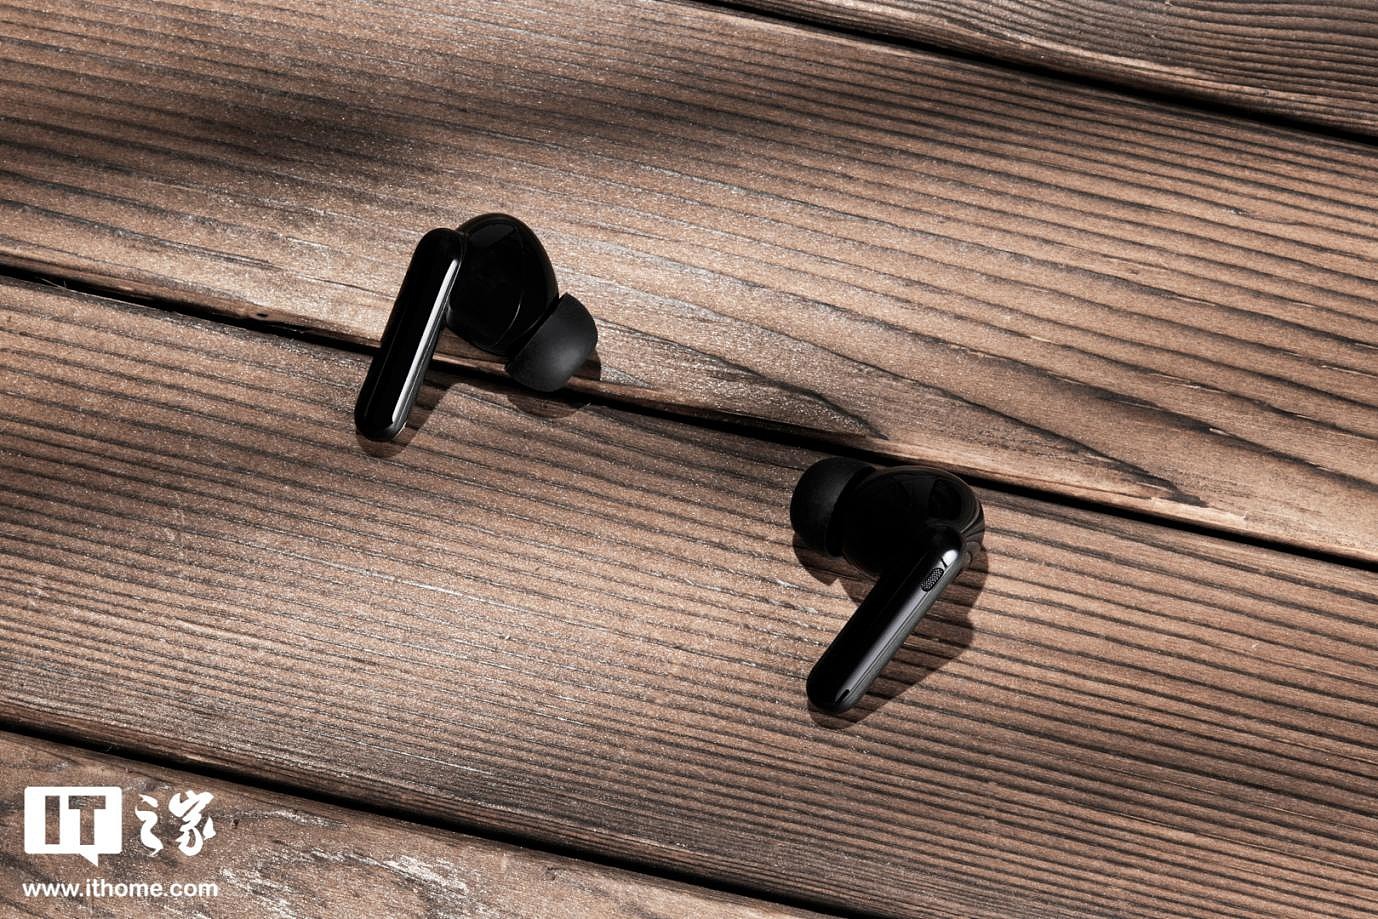 【IT之家评测室】荣耀 Earbuds 3 Pro 真无线降噪耳机体验：不仅旗舰音质，还能监测体温 - 7